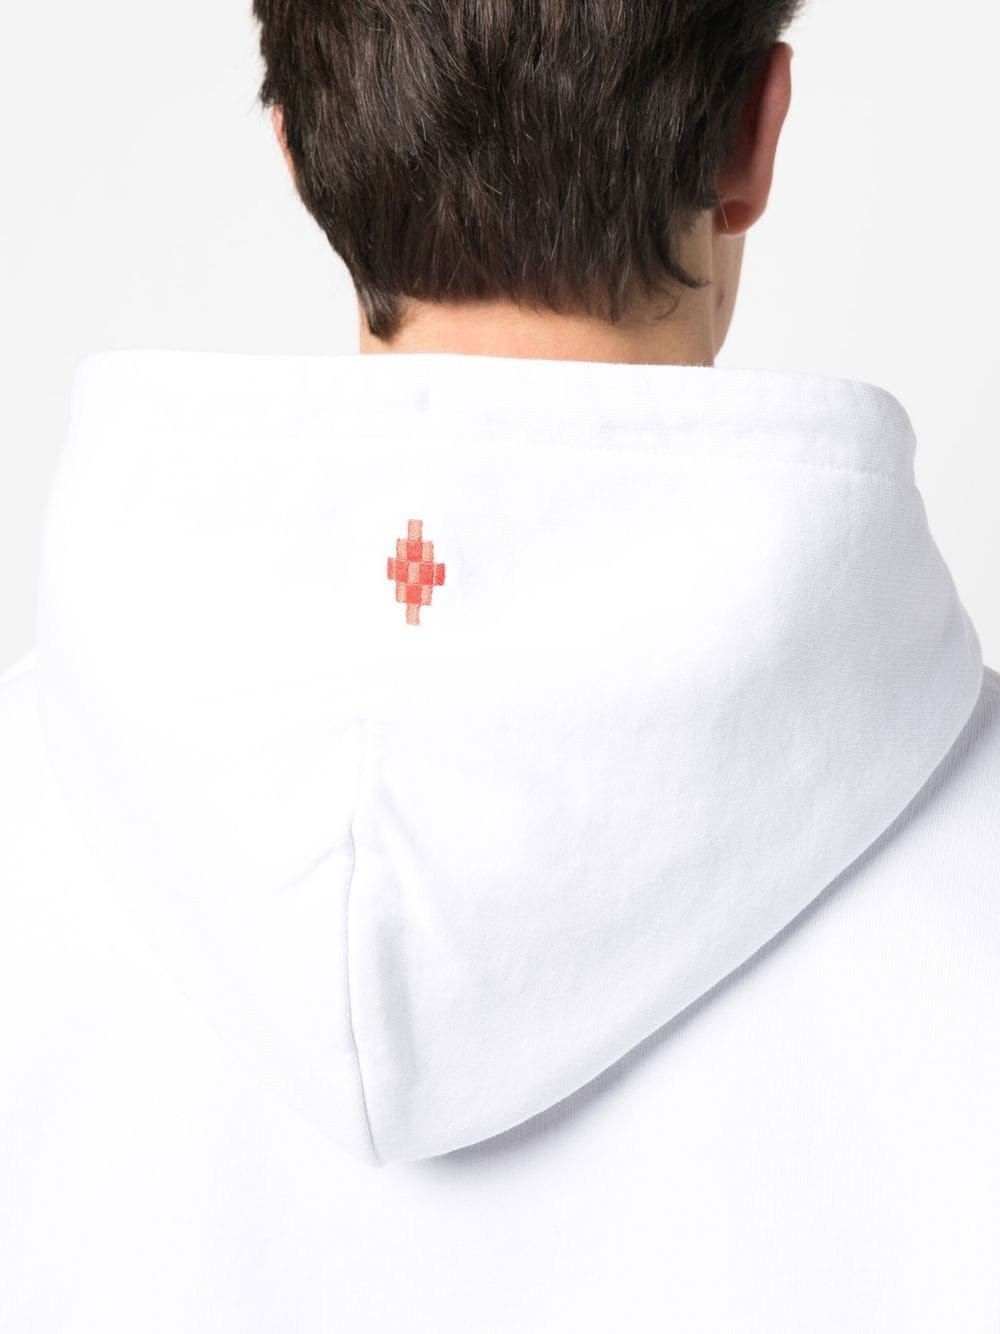 graphic-print cotton hoodie - 5